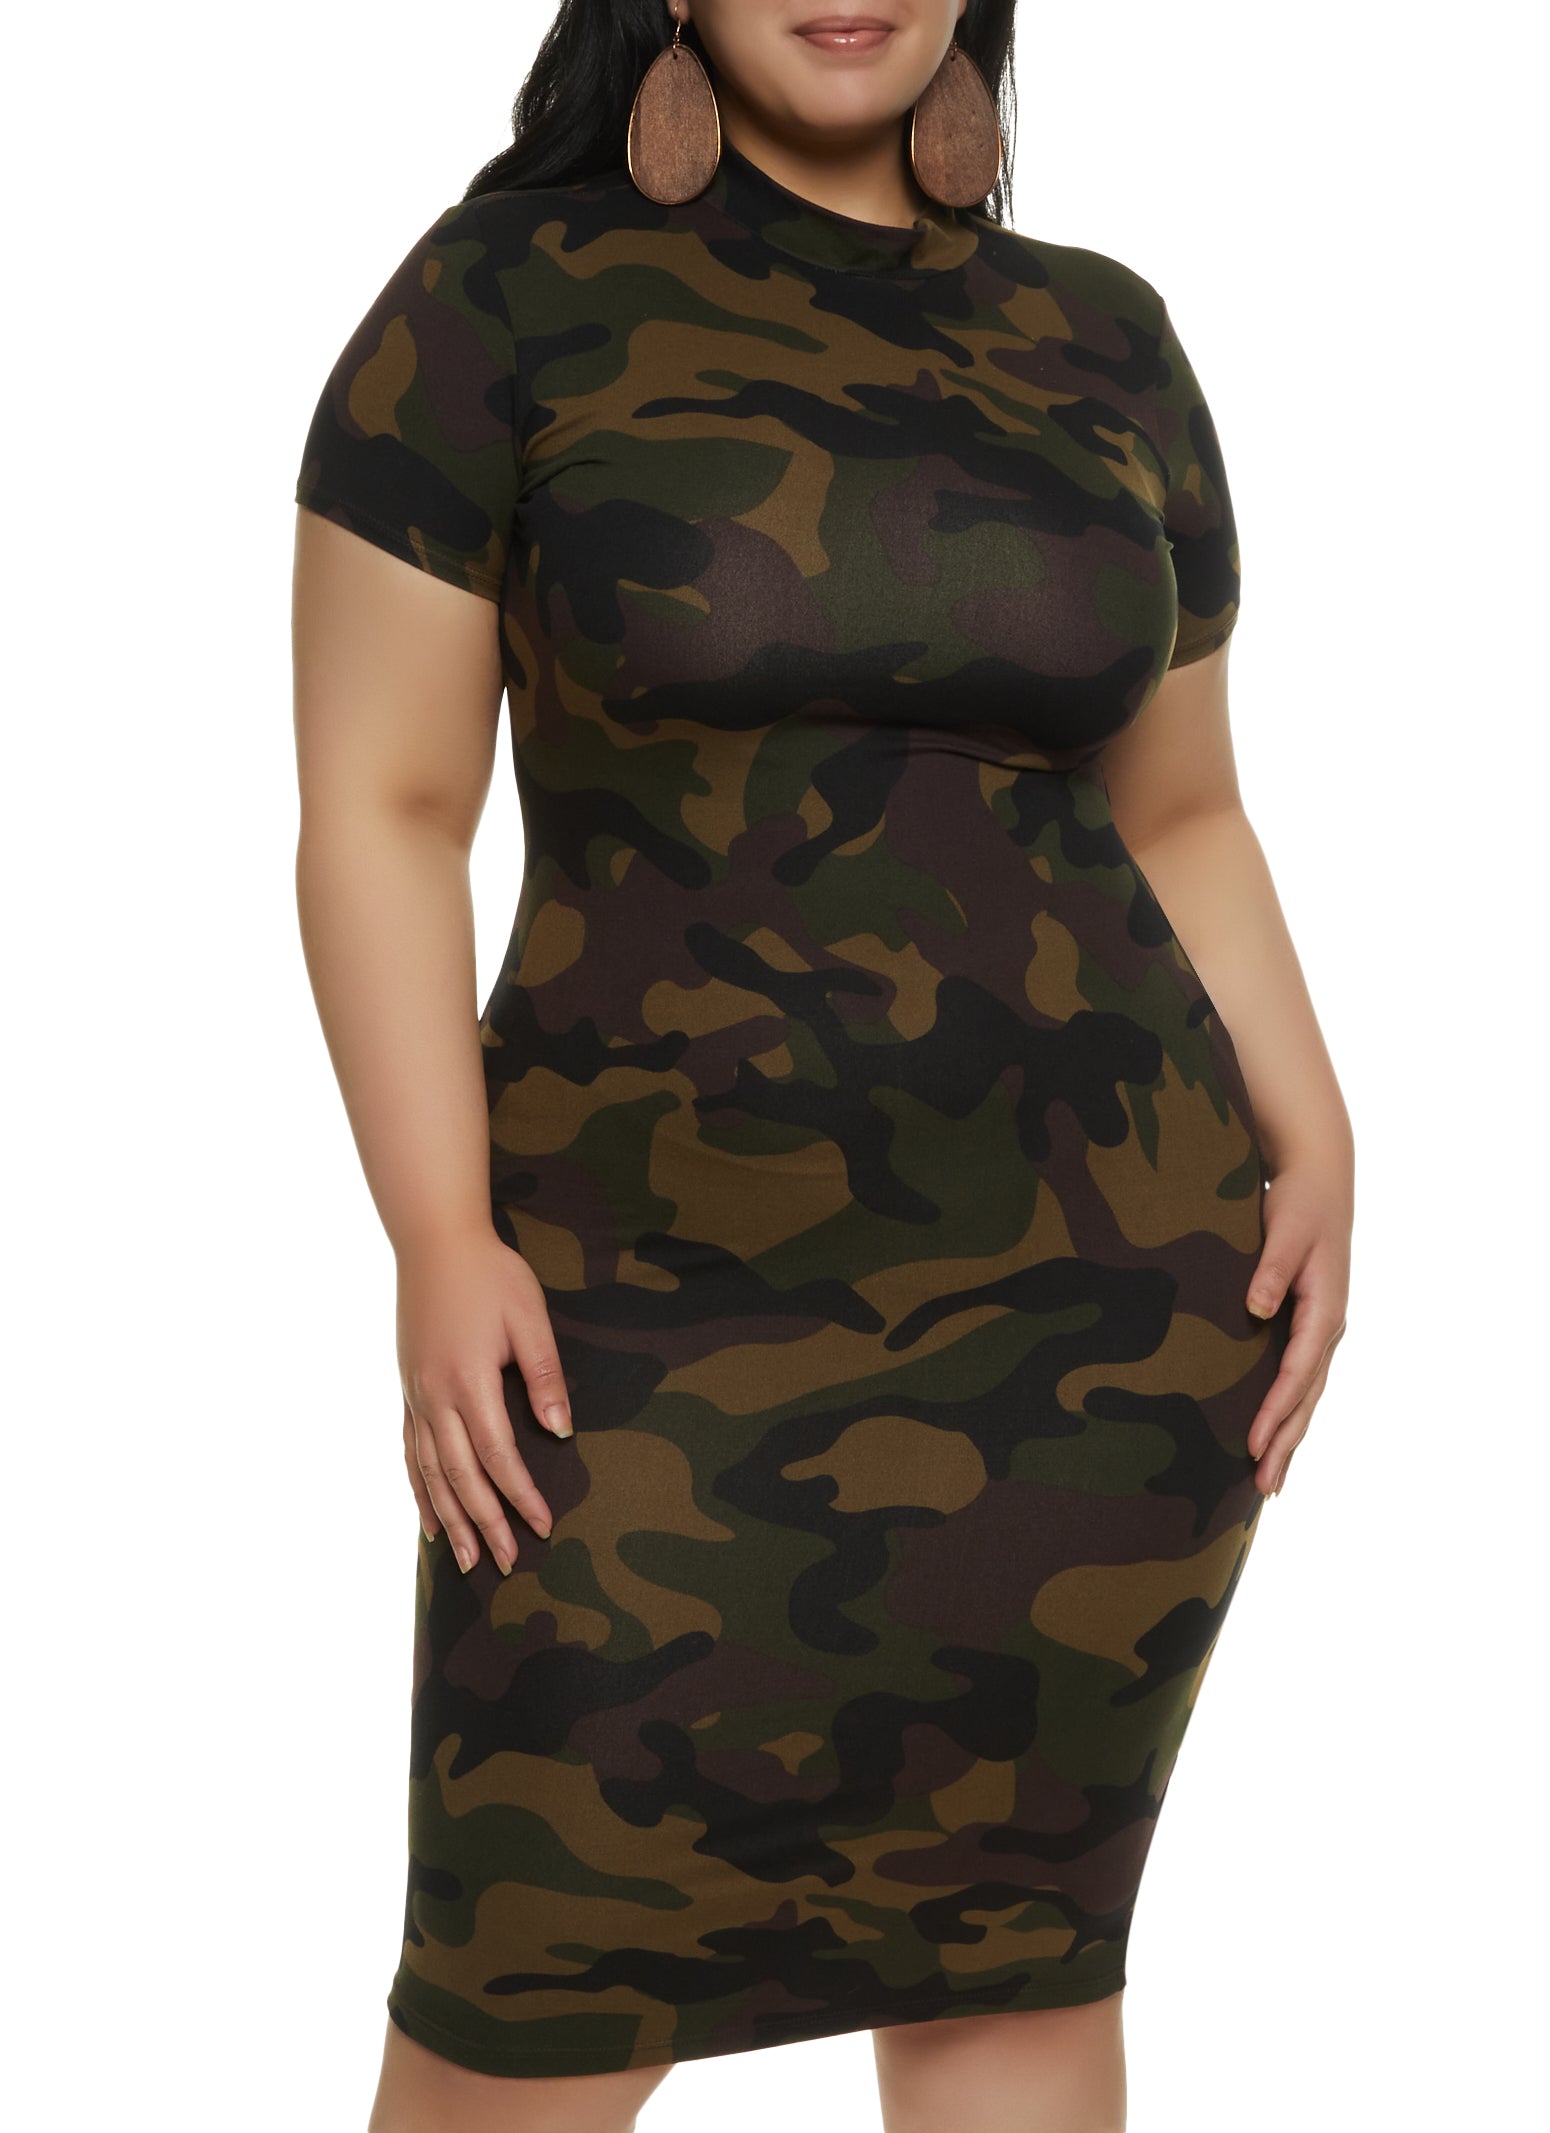 camouflage dresses plus size